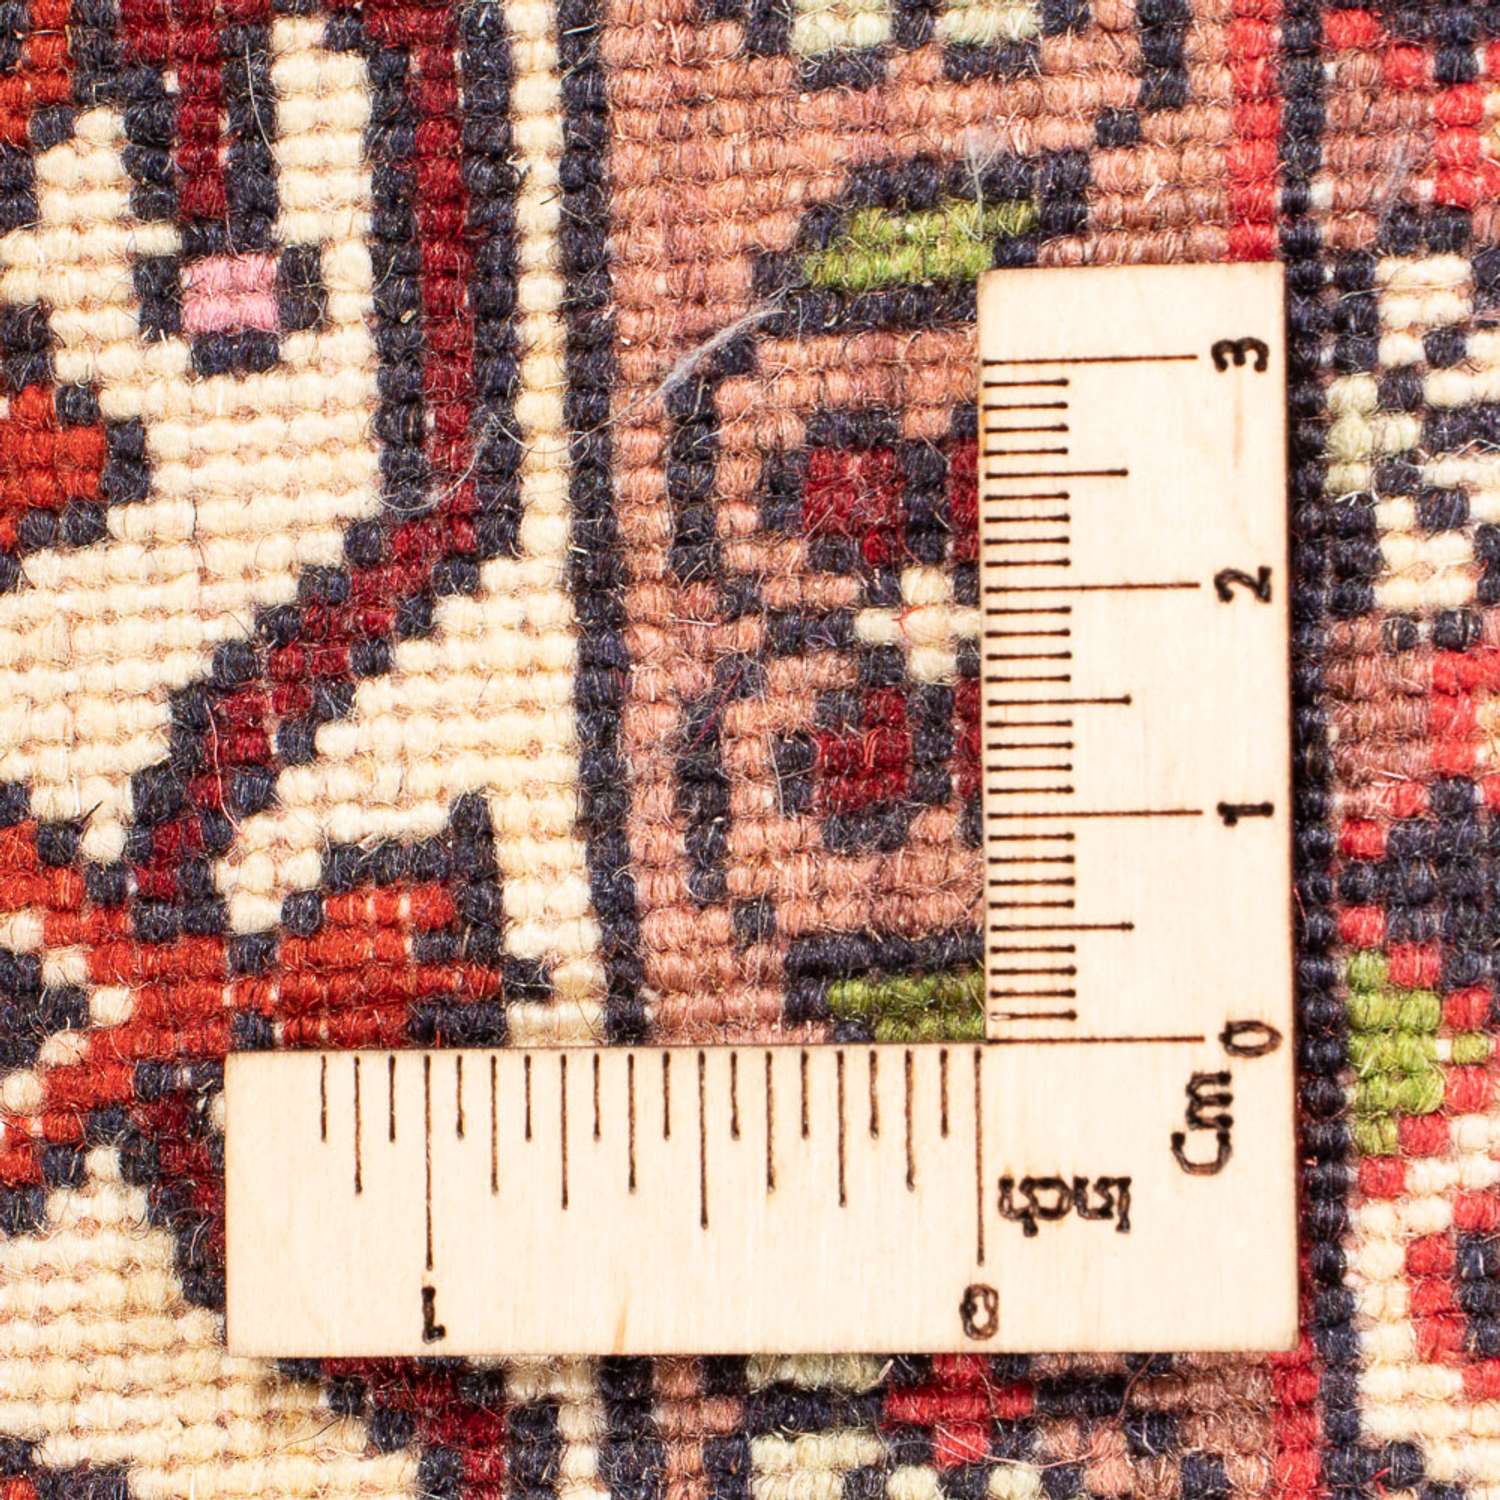 Persisk teppe - Bijar - Royal - 150 x 87 cm - rød